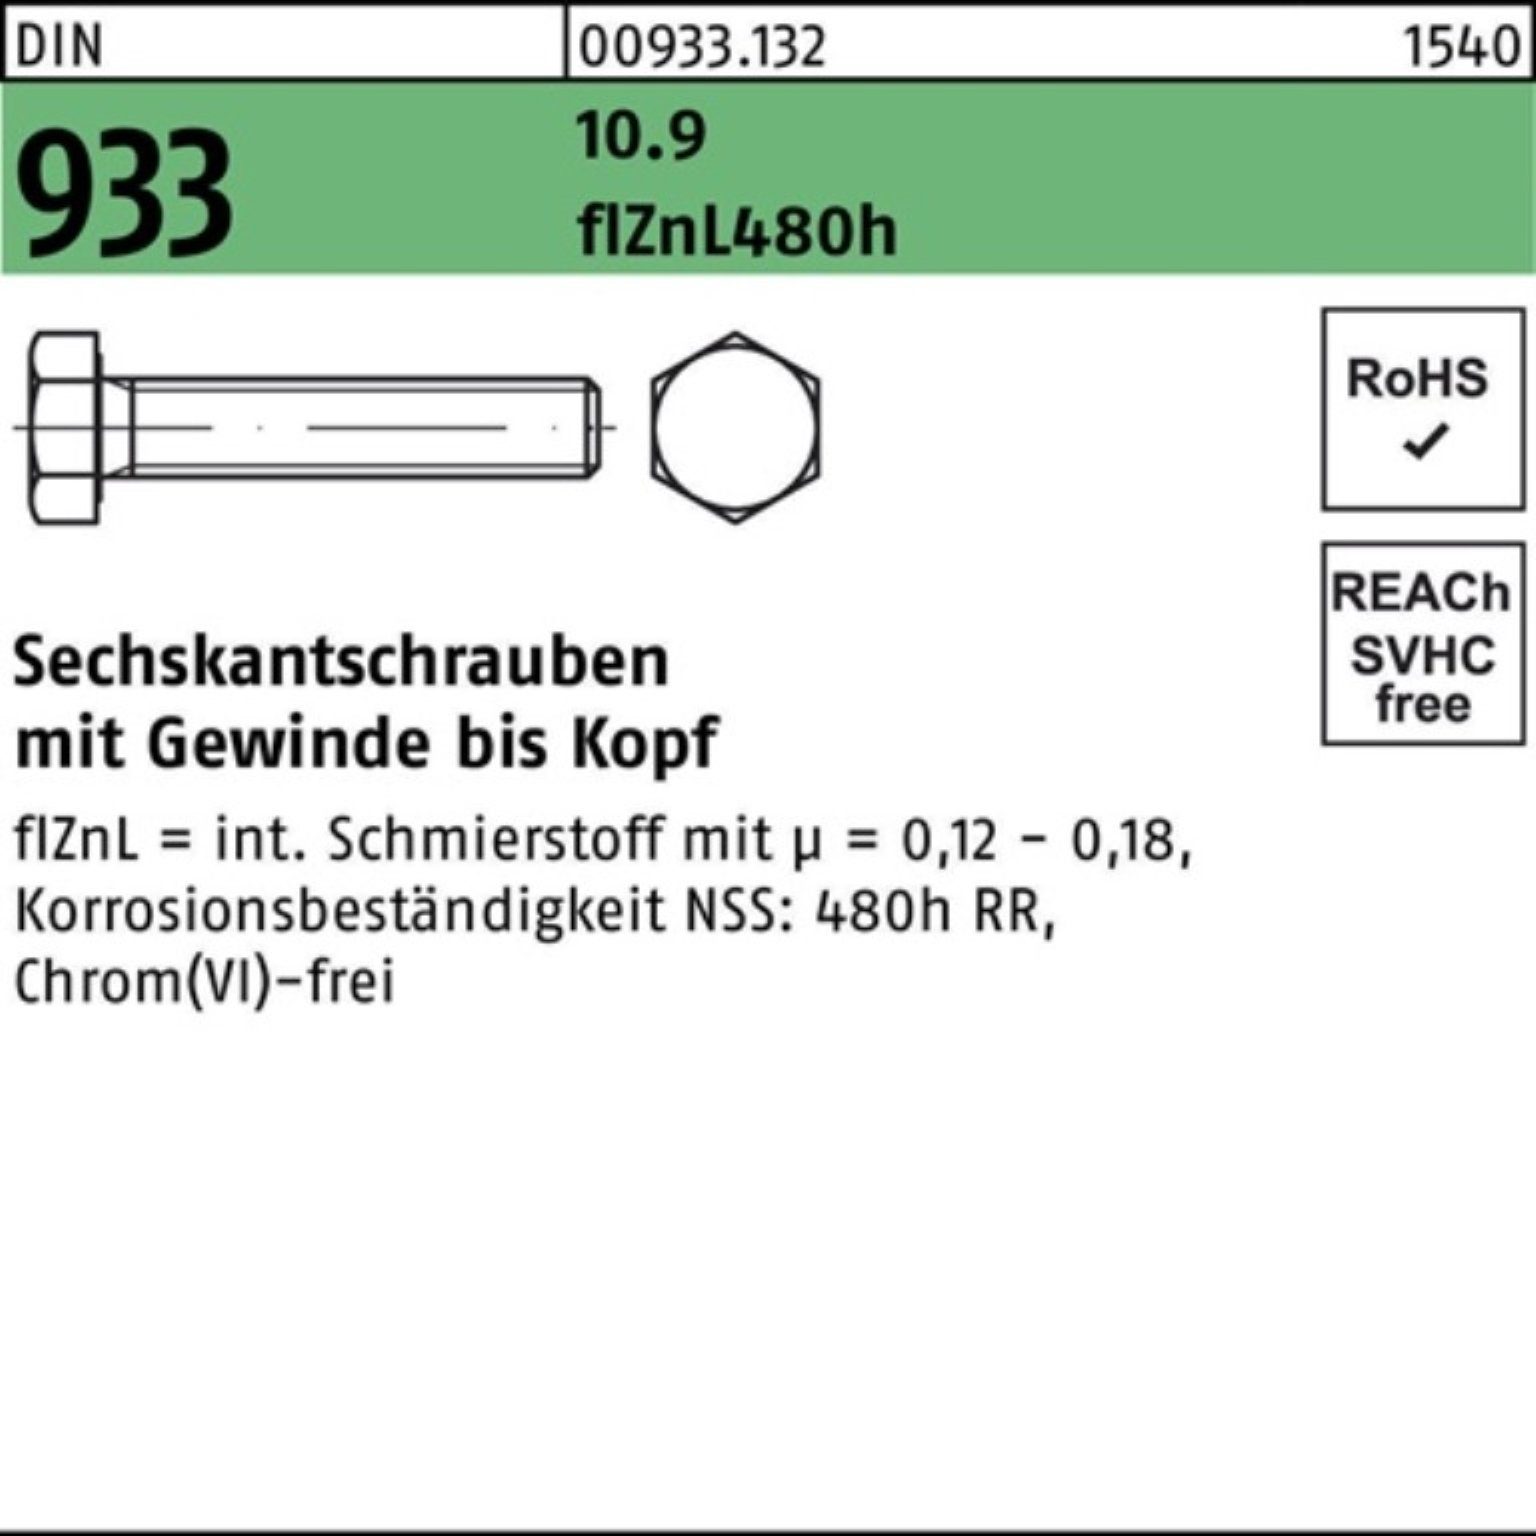 M20x 10.9 100er Sechskantschraube DIN 35 933 VG Reyher Pack flZnL/nc/x/x/480h Sechskantschraube